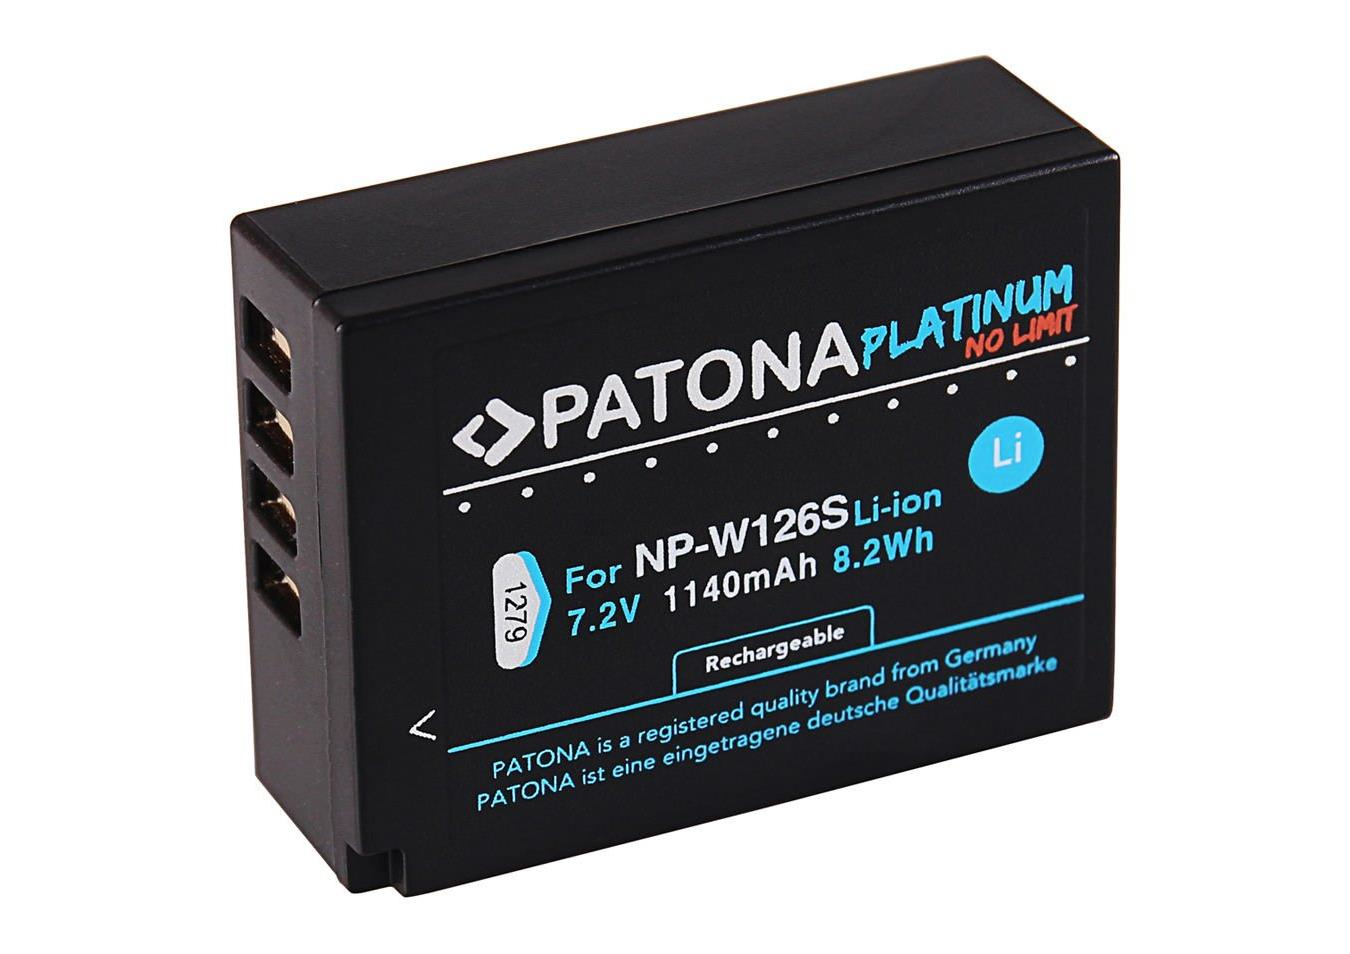 Patona Platinum Batarya Fuji NP-W126S İçin